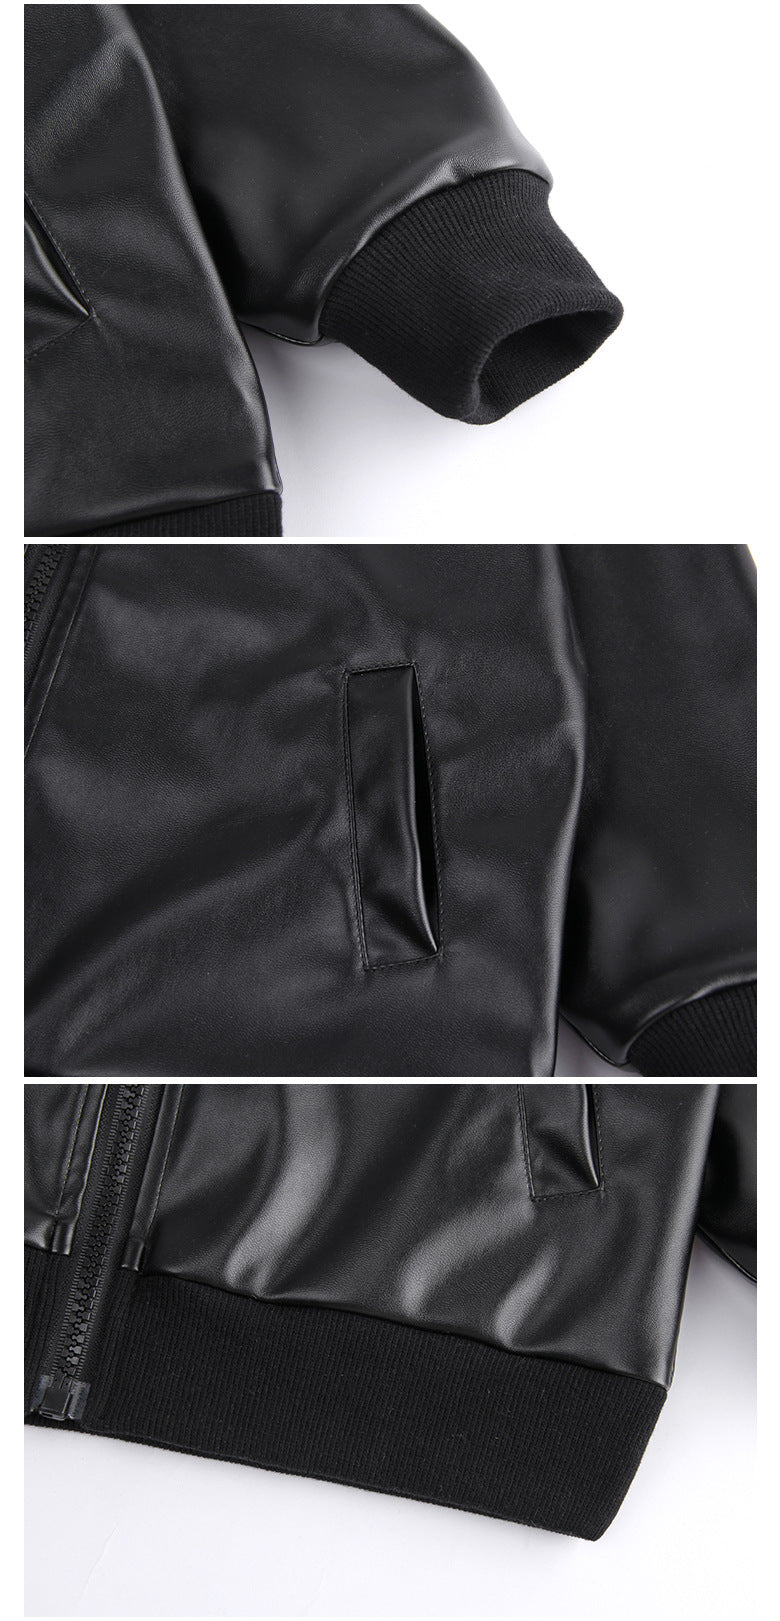 Black Leather Motorcycle Boy Jackets